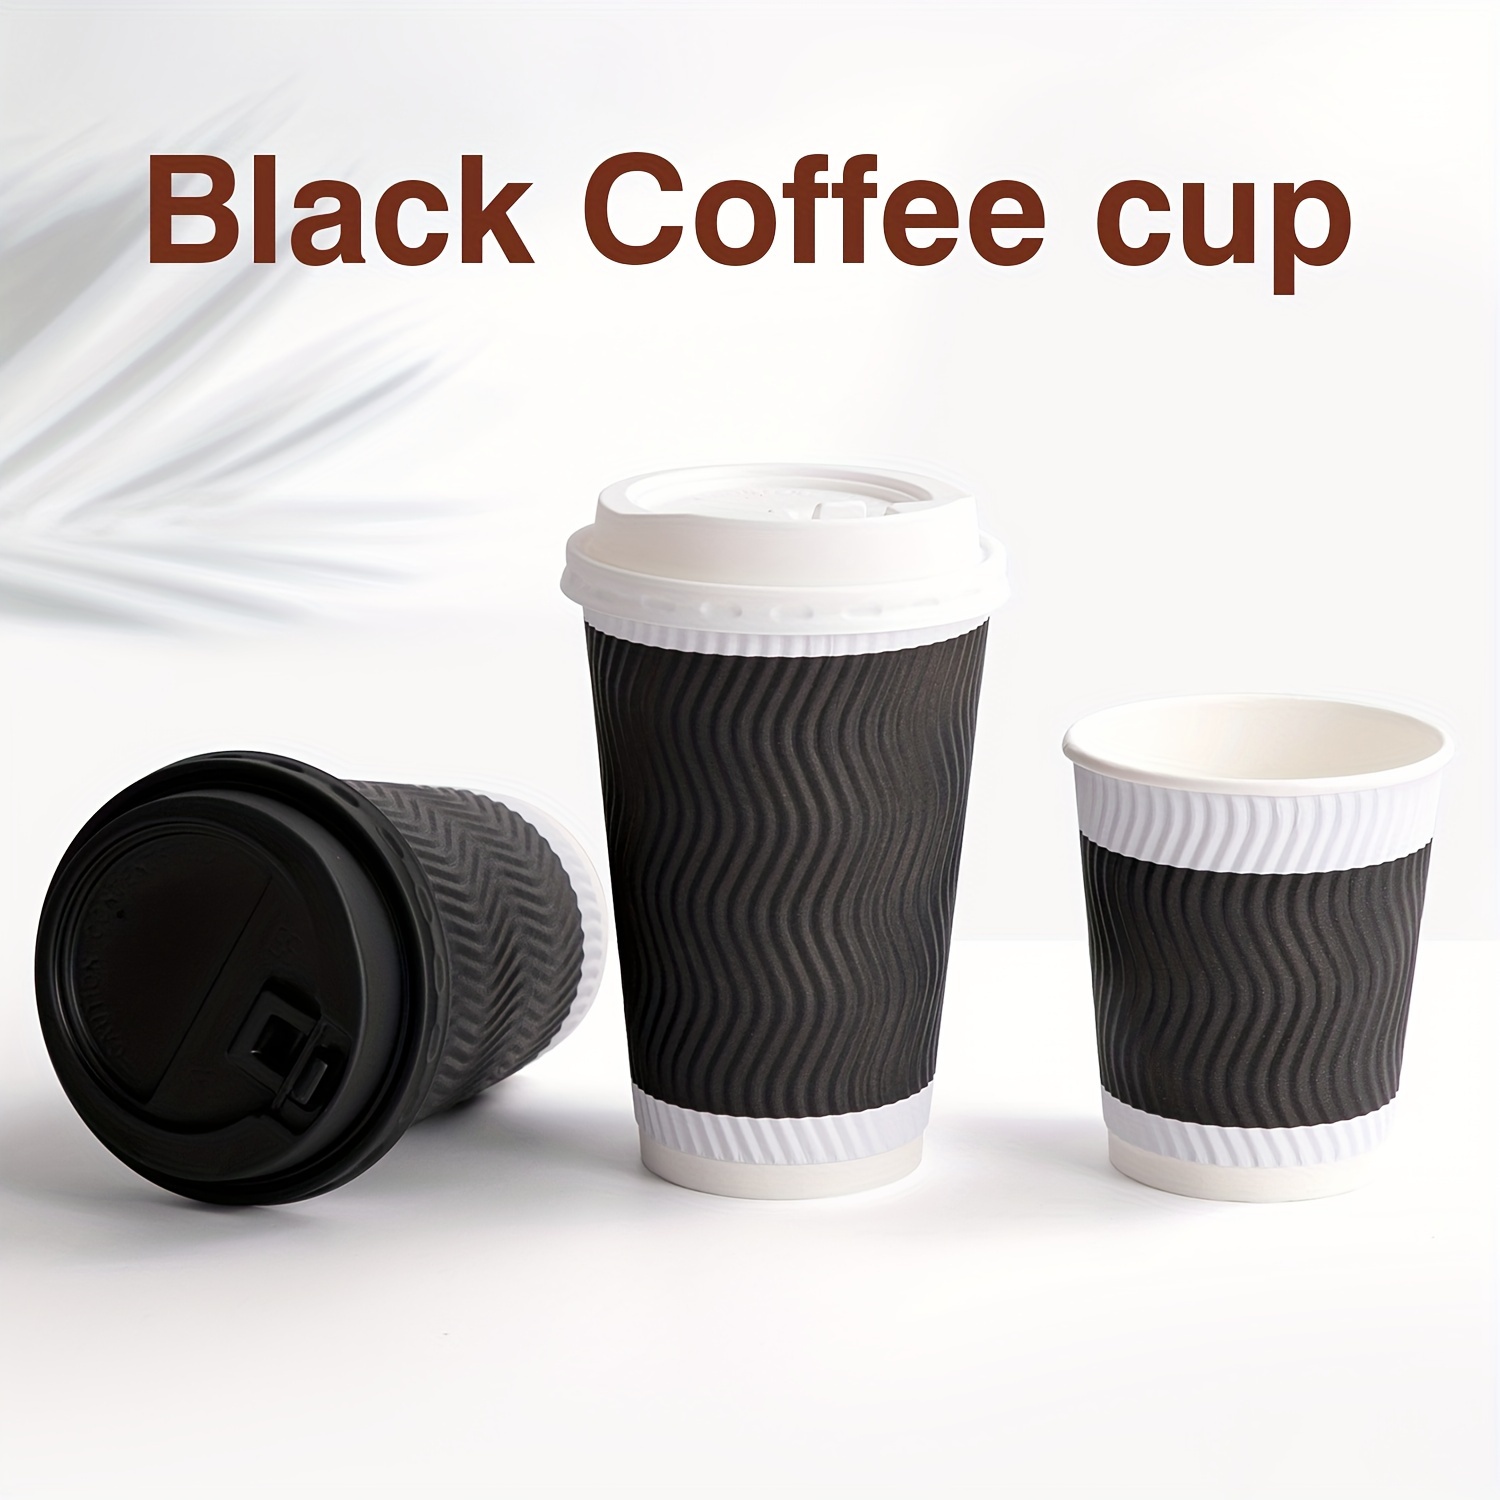 Black Corrugated Pattern Coffee Mug